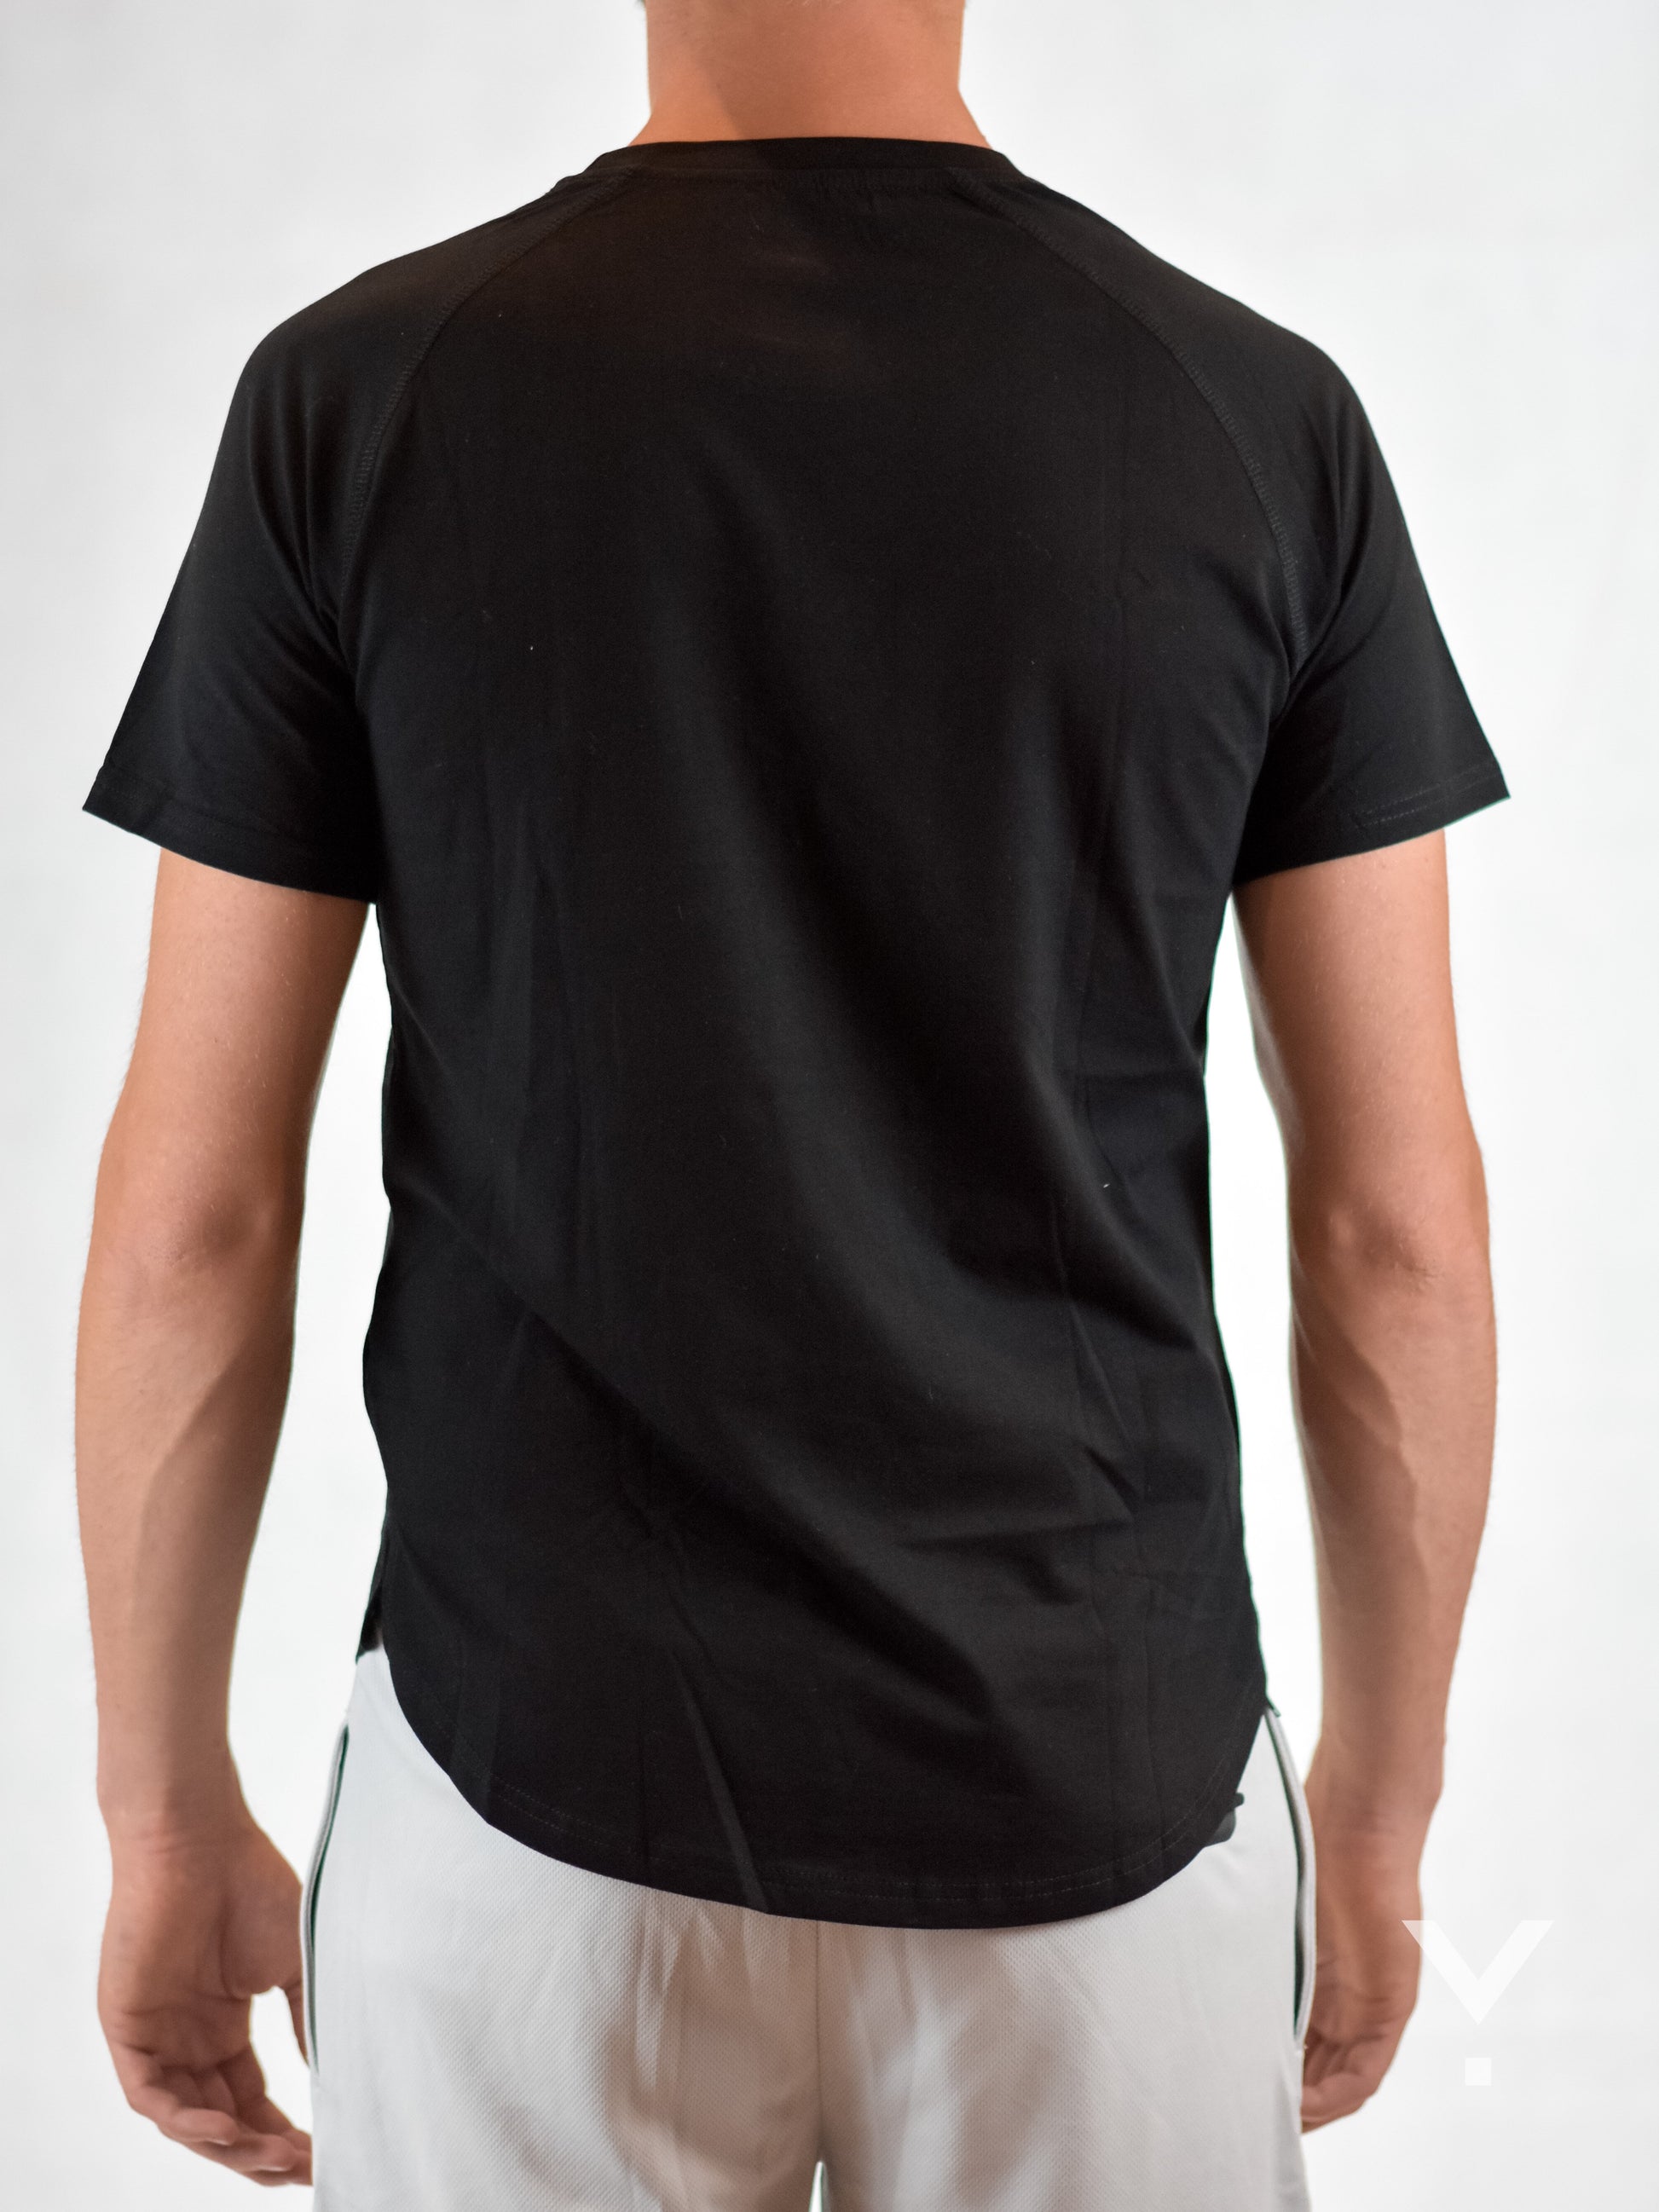 Section T-Shirt Black - Mens T-shirts | AVAYOS